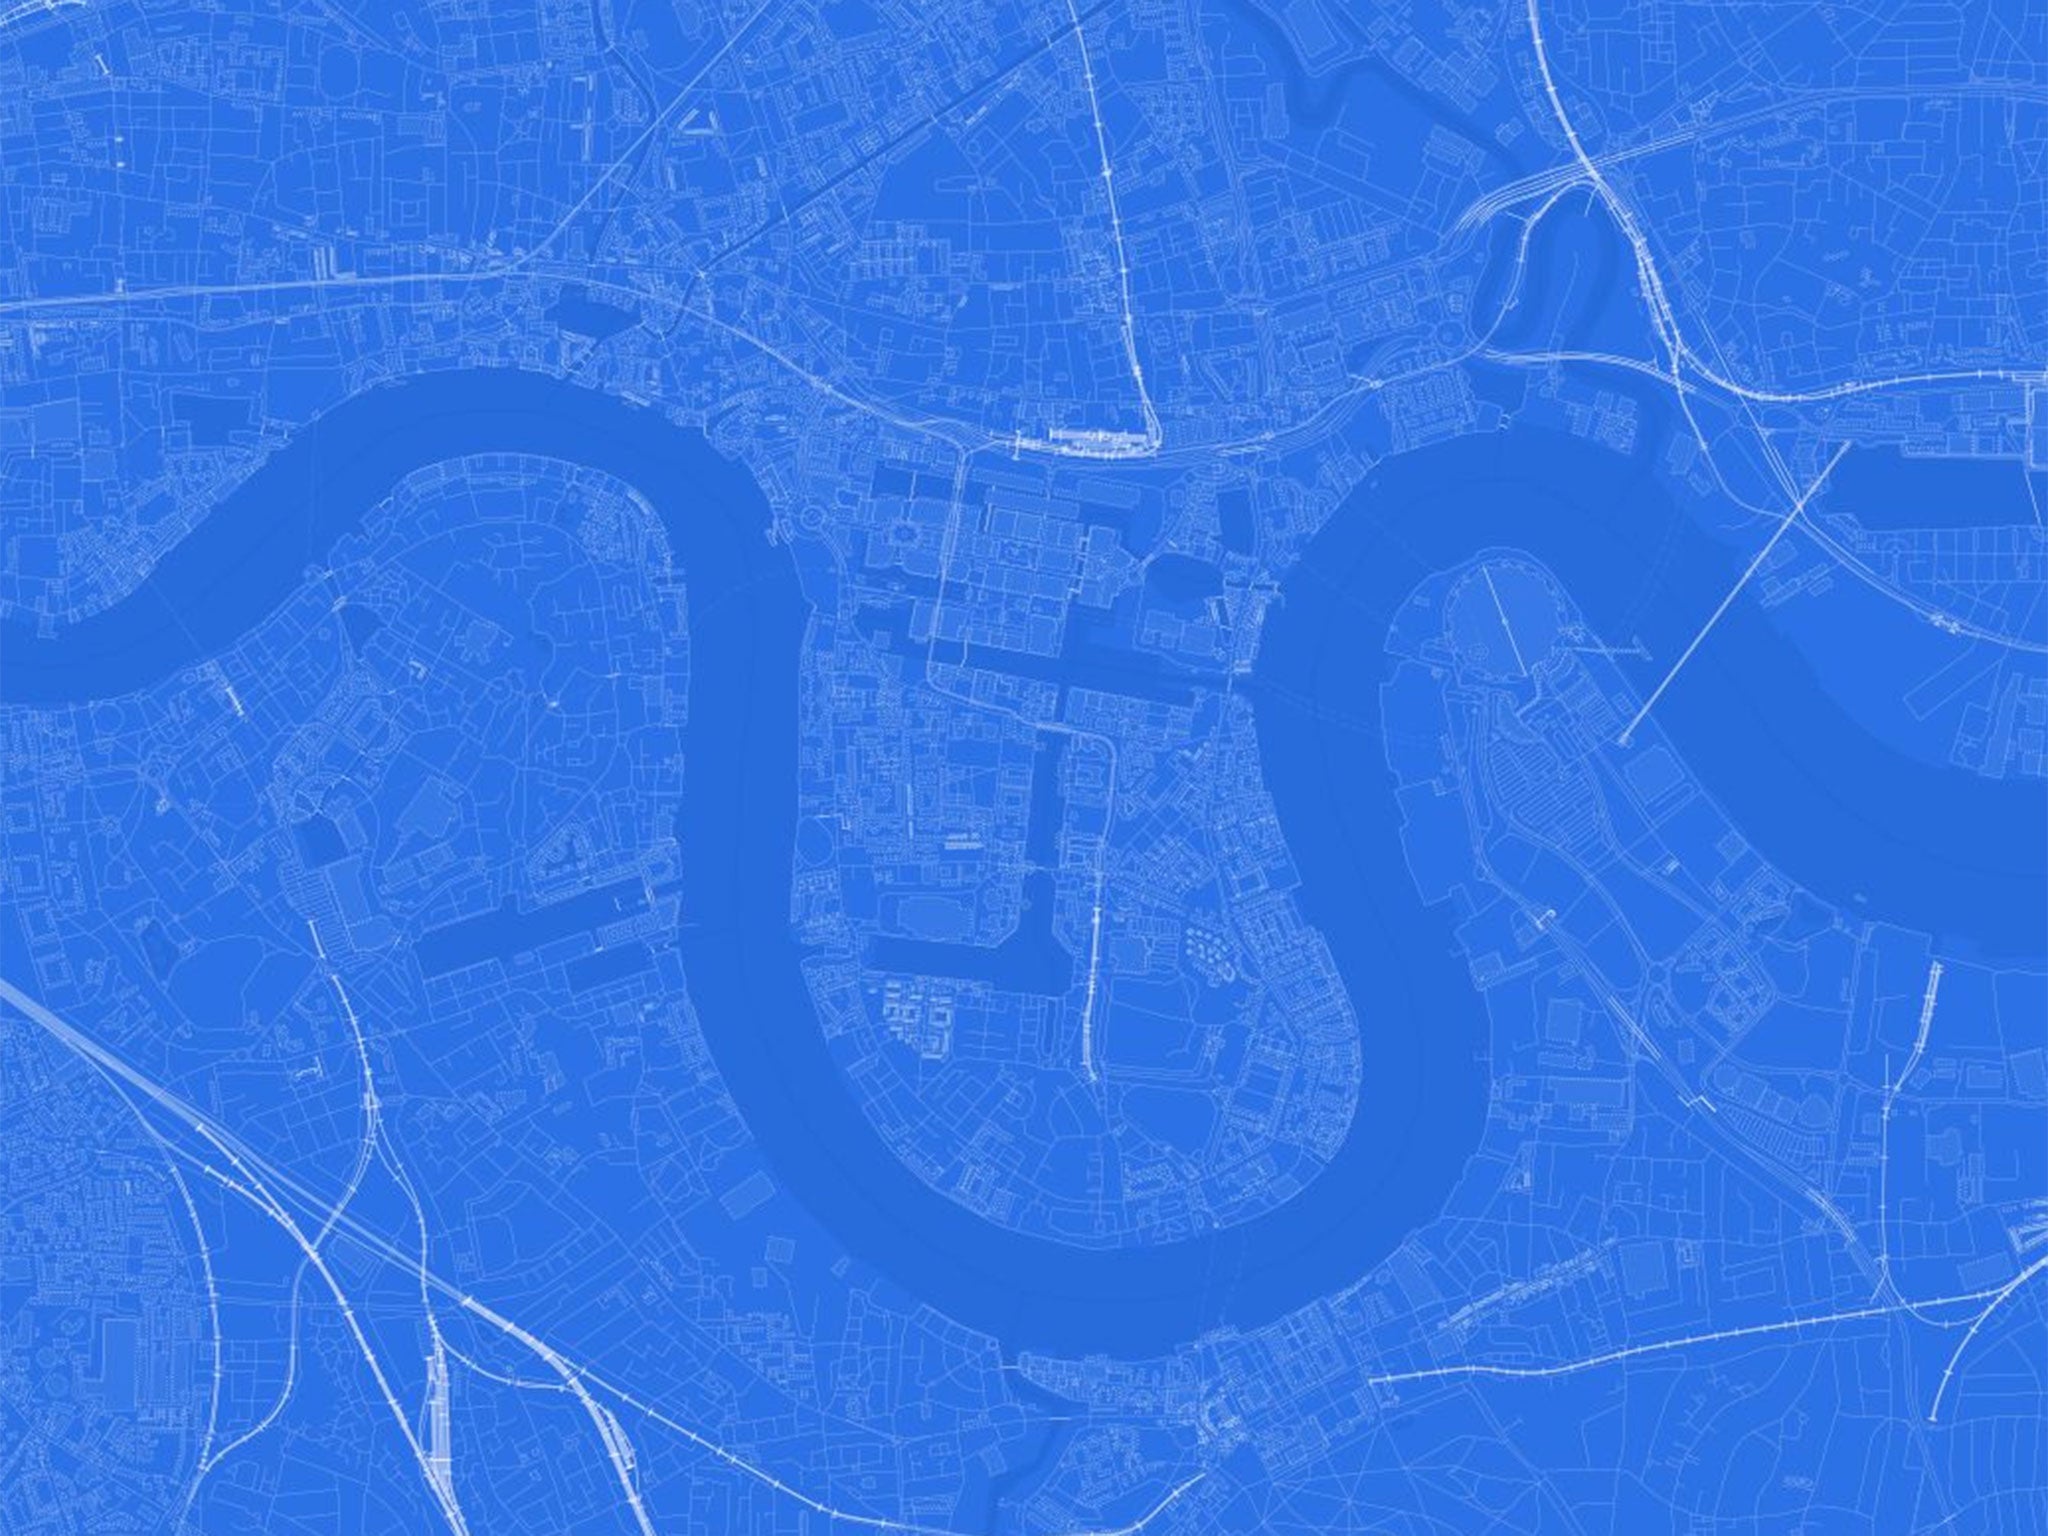 A blueprint map of London